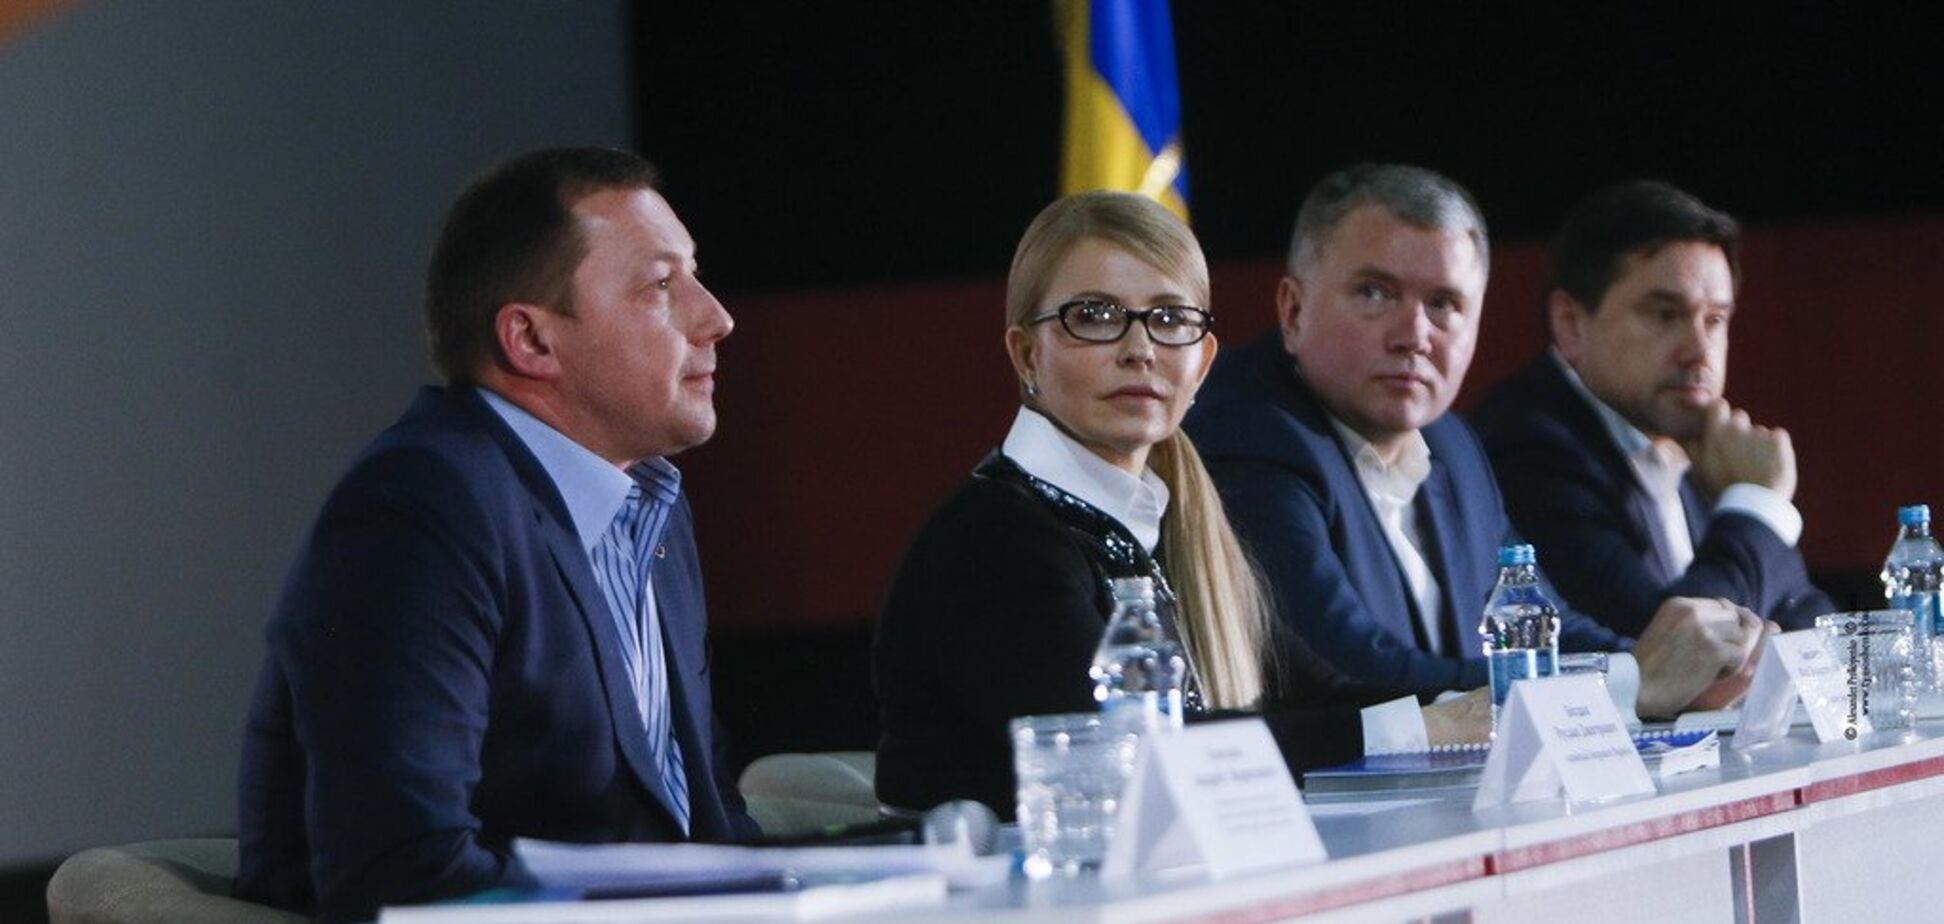 Молодь буде забезпечена доступним житлом – Тимошенко